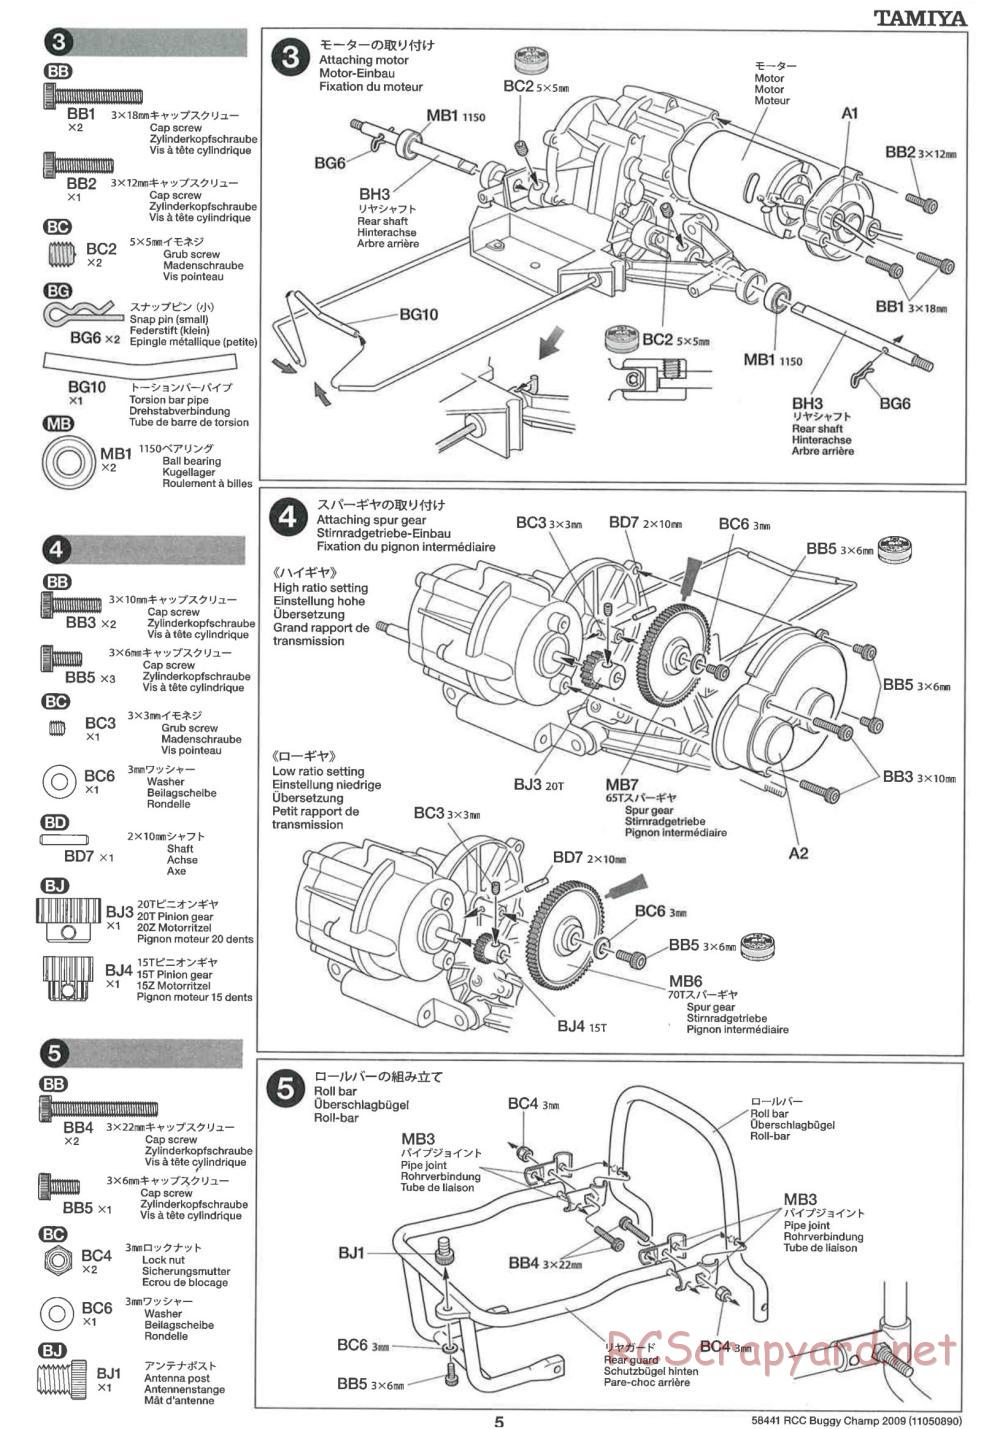 Tamiya - Buggy Champ Chassis - Manual - Page 5